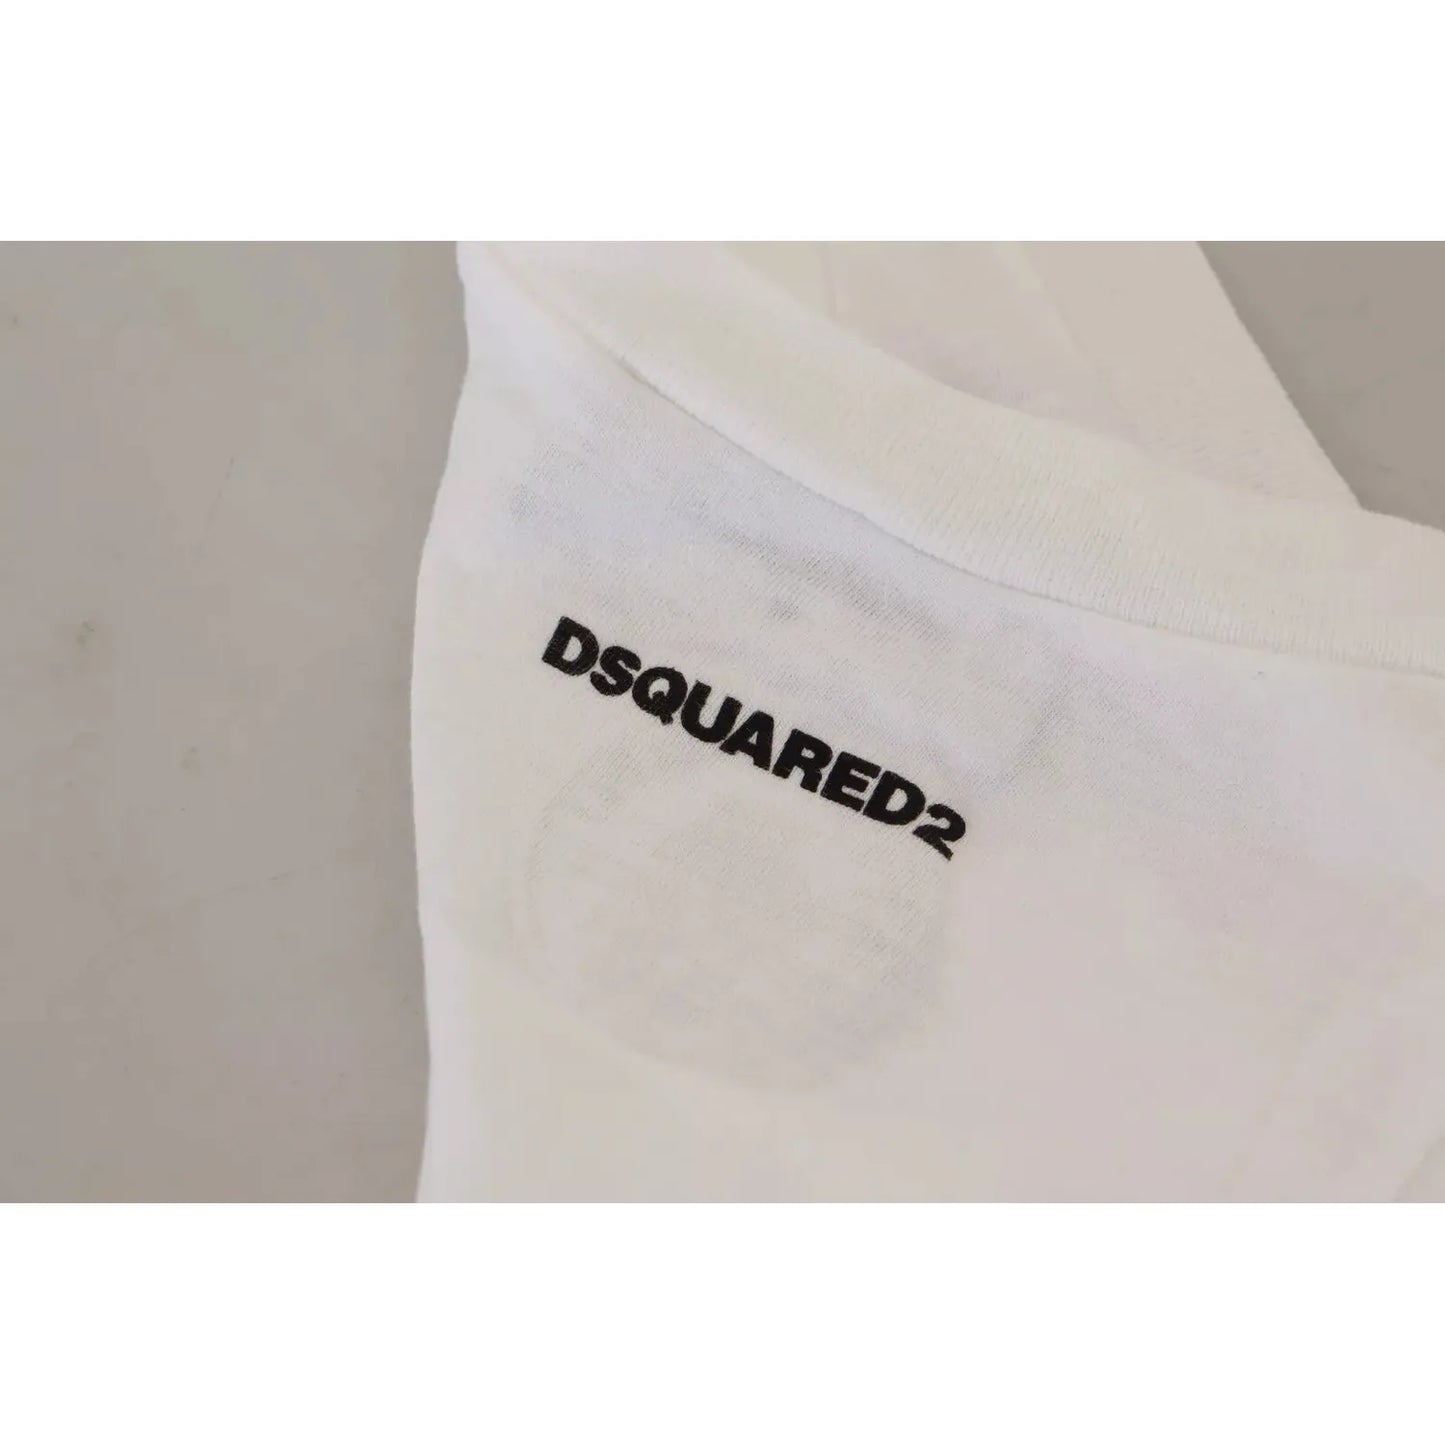 Dsquared² White Cotton Linen Sleeveless Tank T-shirt white-cotton-linen-sleeveless-tank-t-shirt